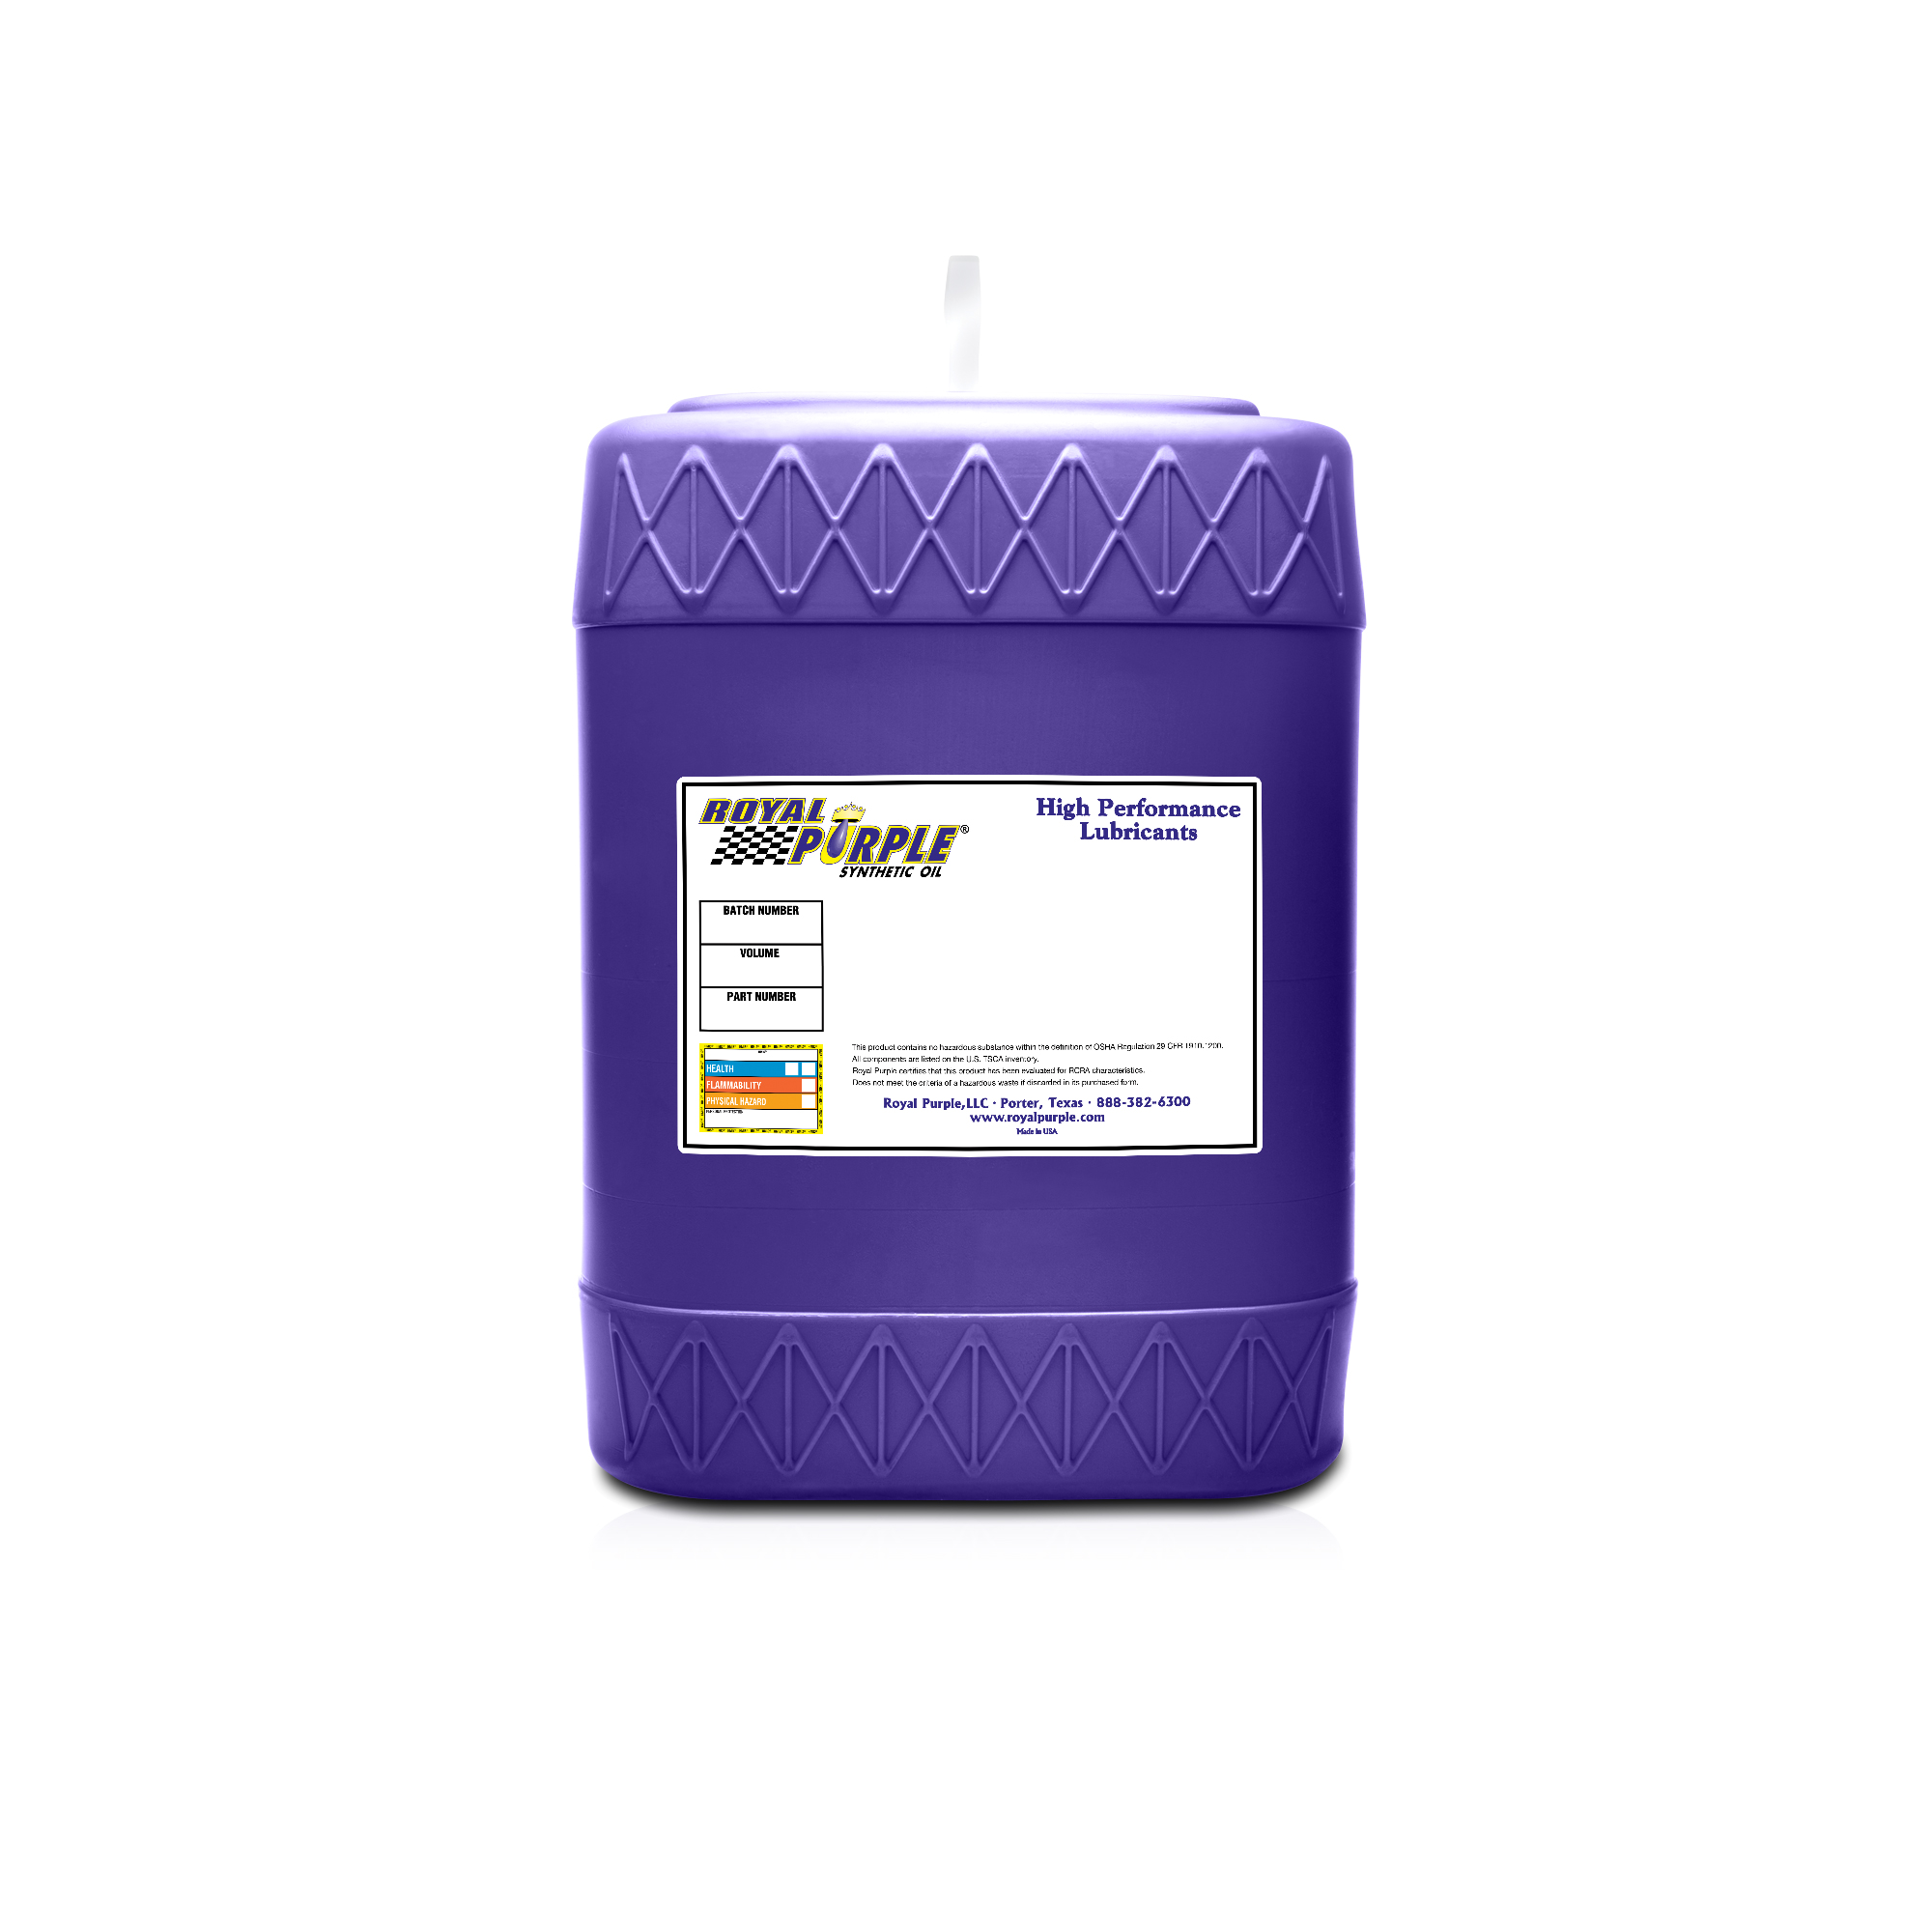 Royal Purple Synfilm GT Wind Gear 320 5-Gallon Pail 11575 Image